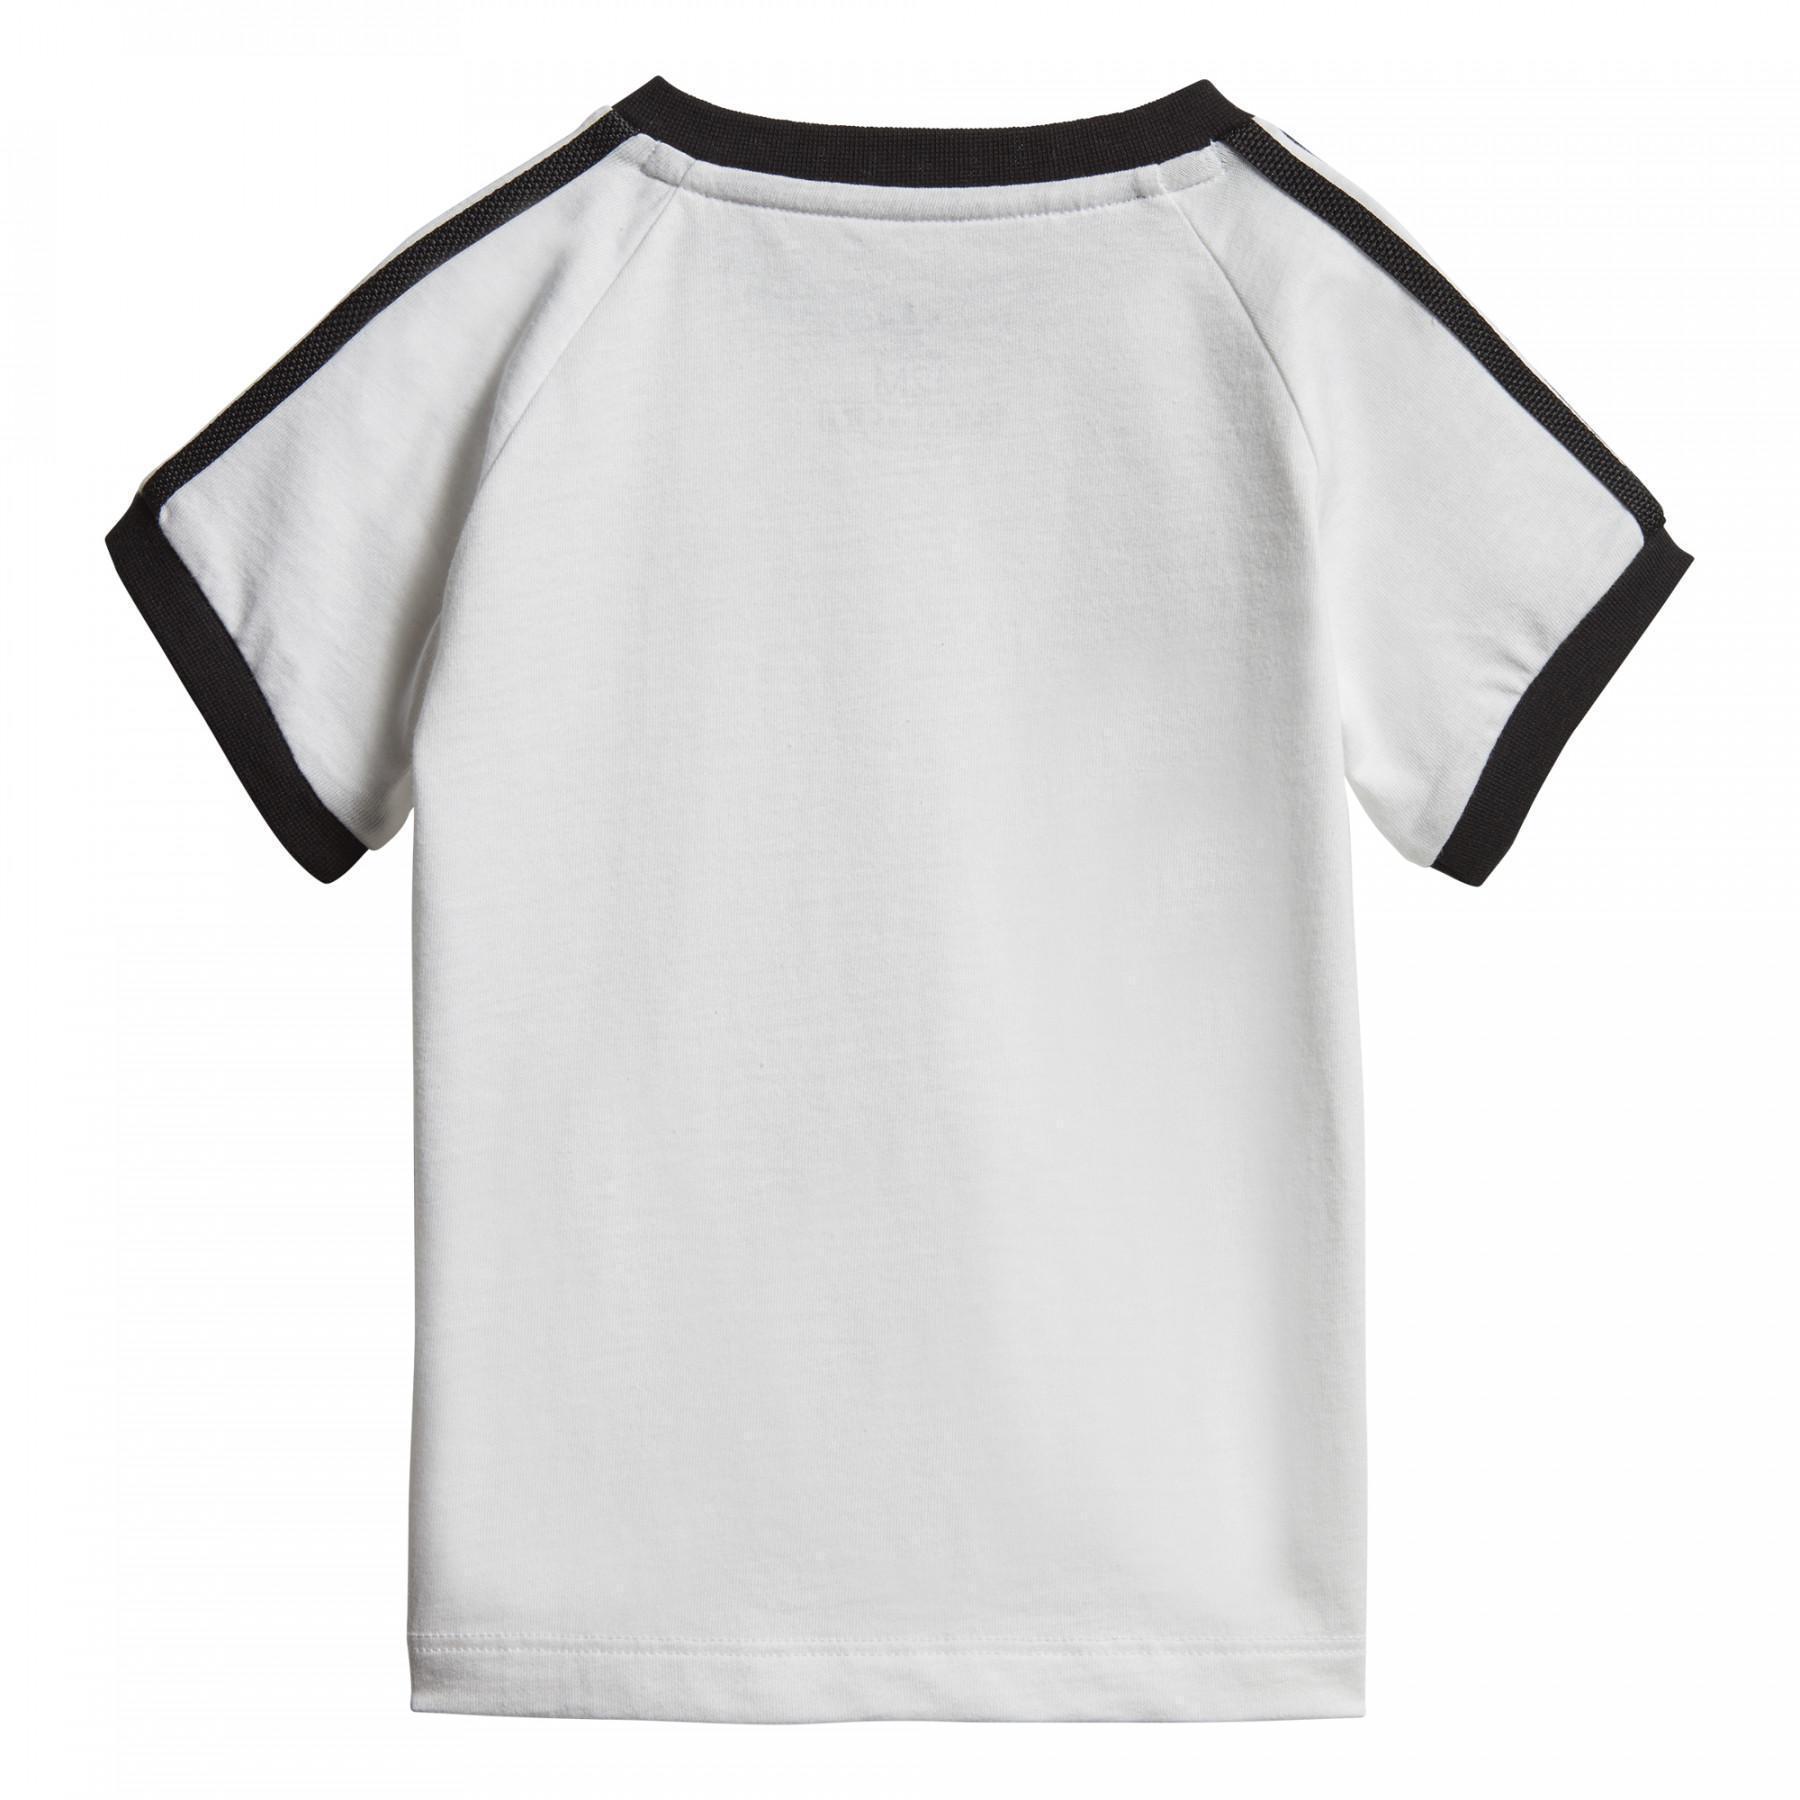 baby T-shirt adidas 3-Stripes Trefoil